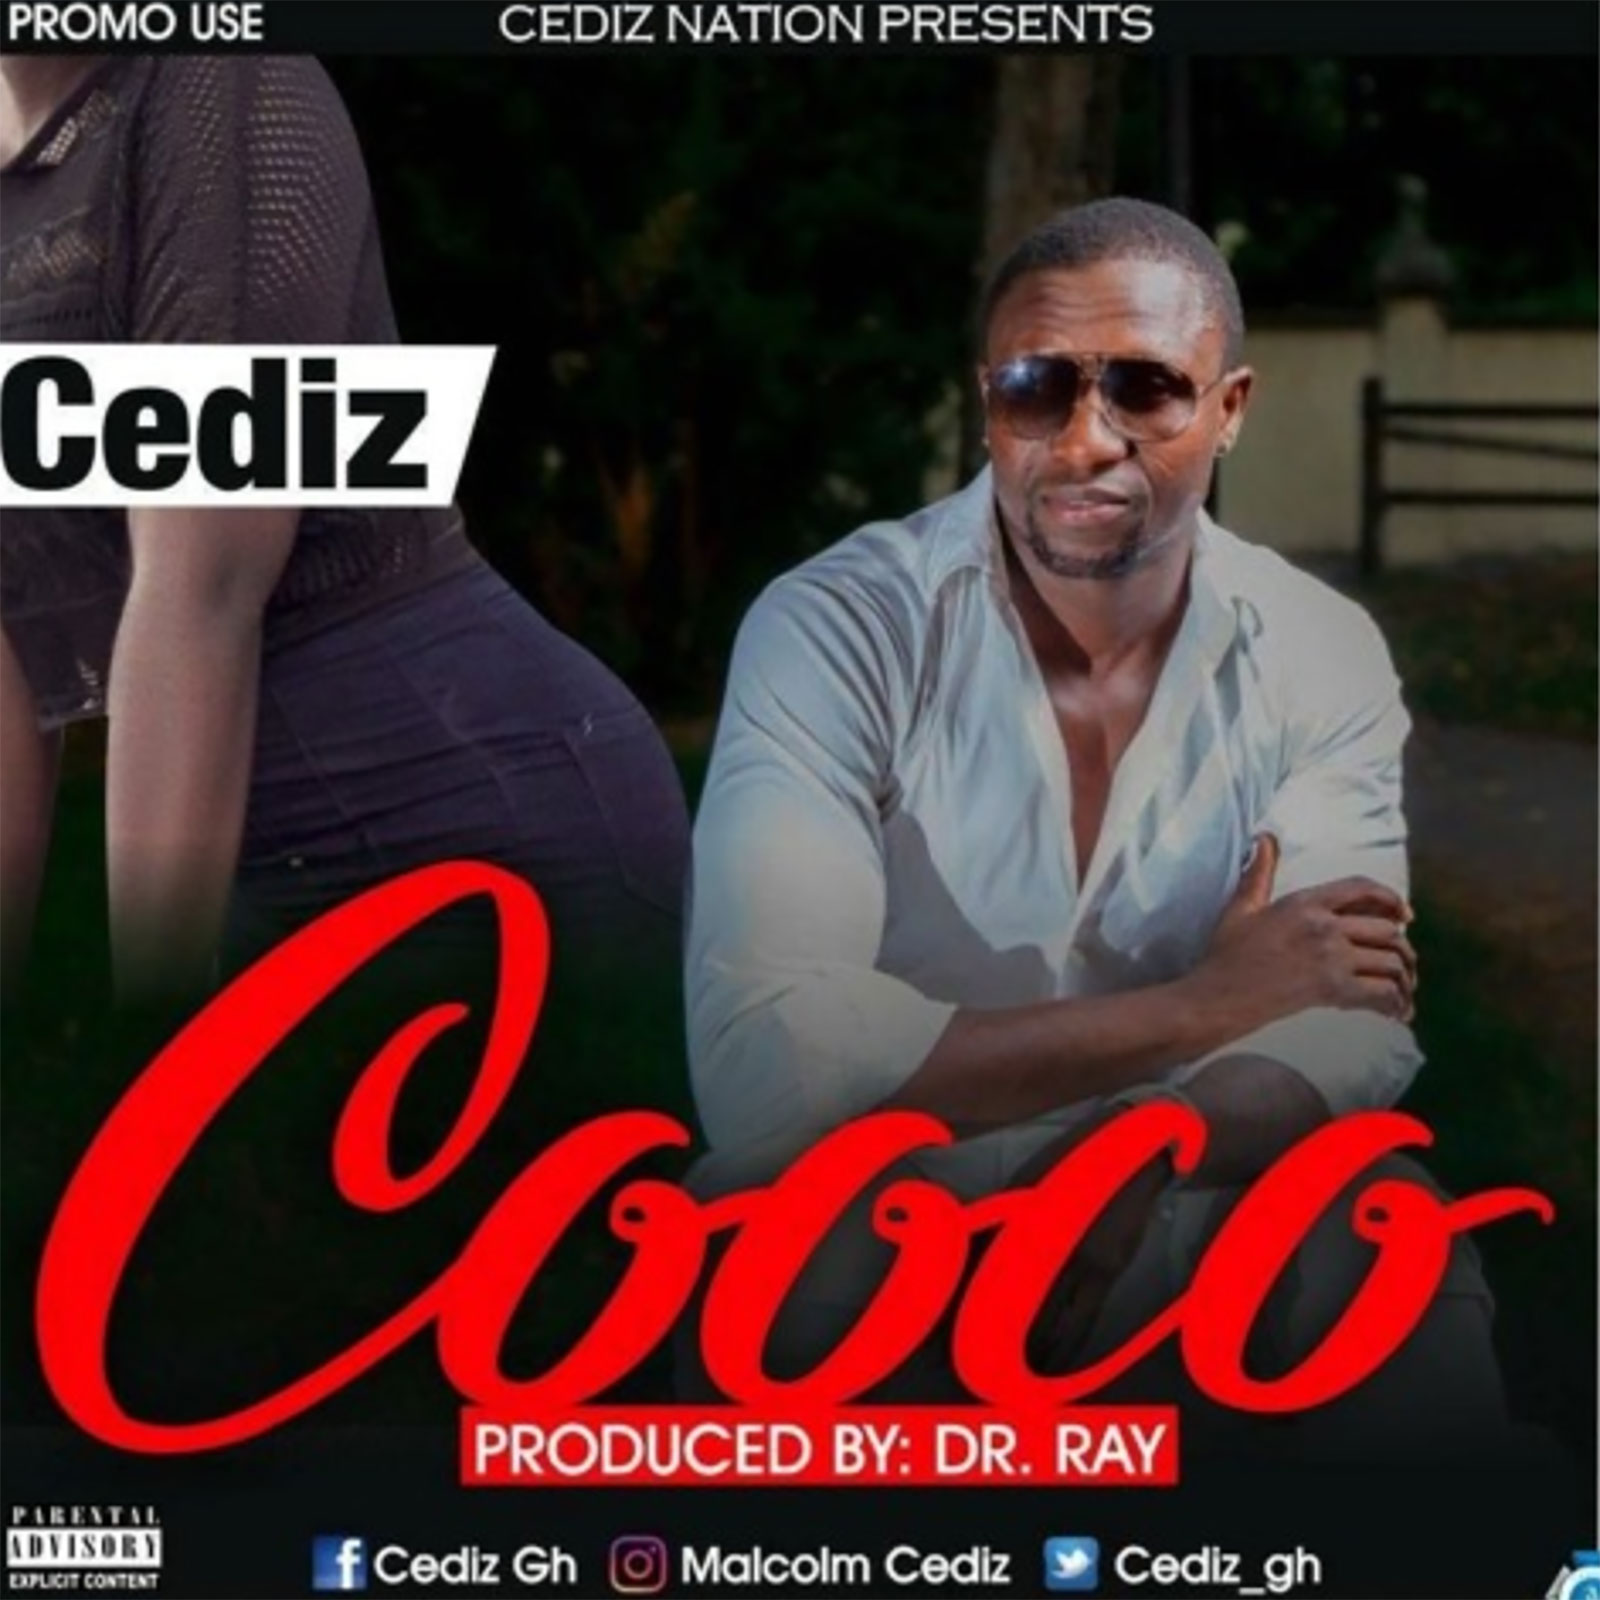 Cooco by Cediz